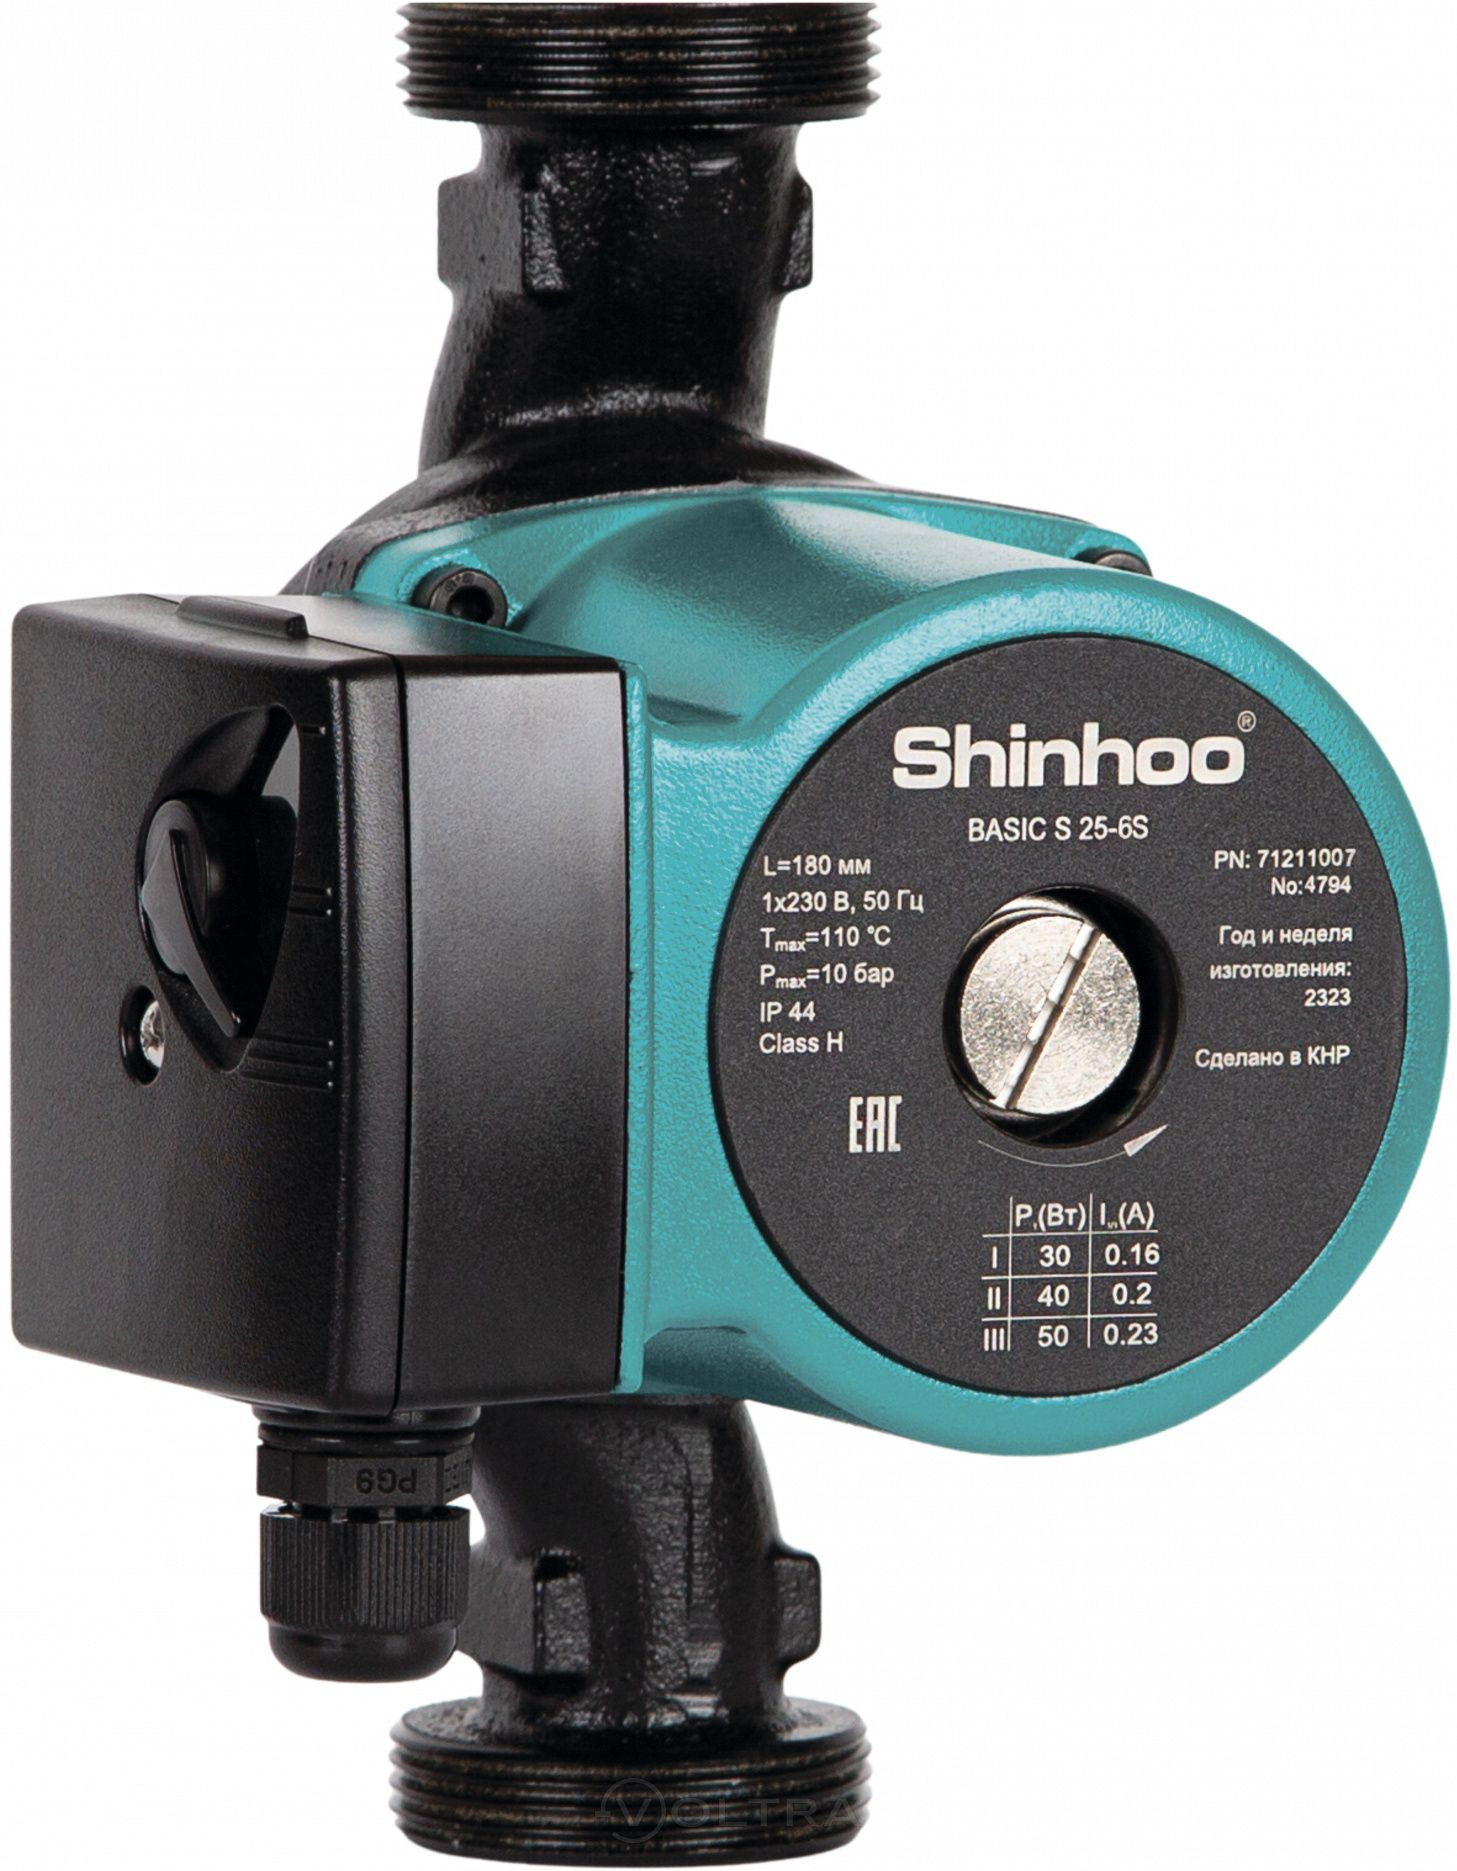 SHINHOO BASIC S 32-4S 180